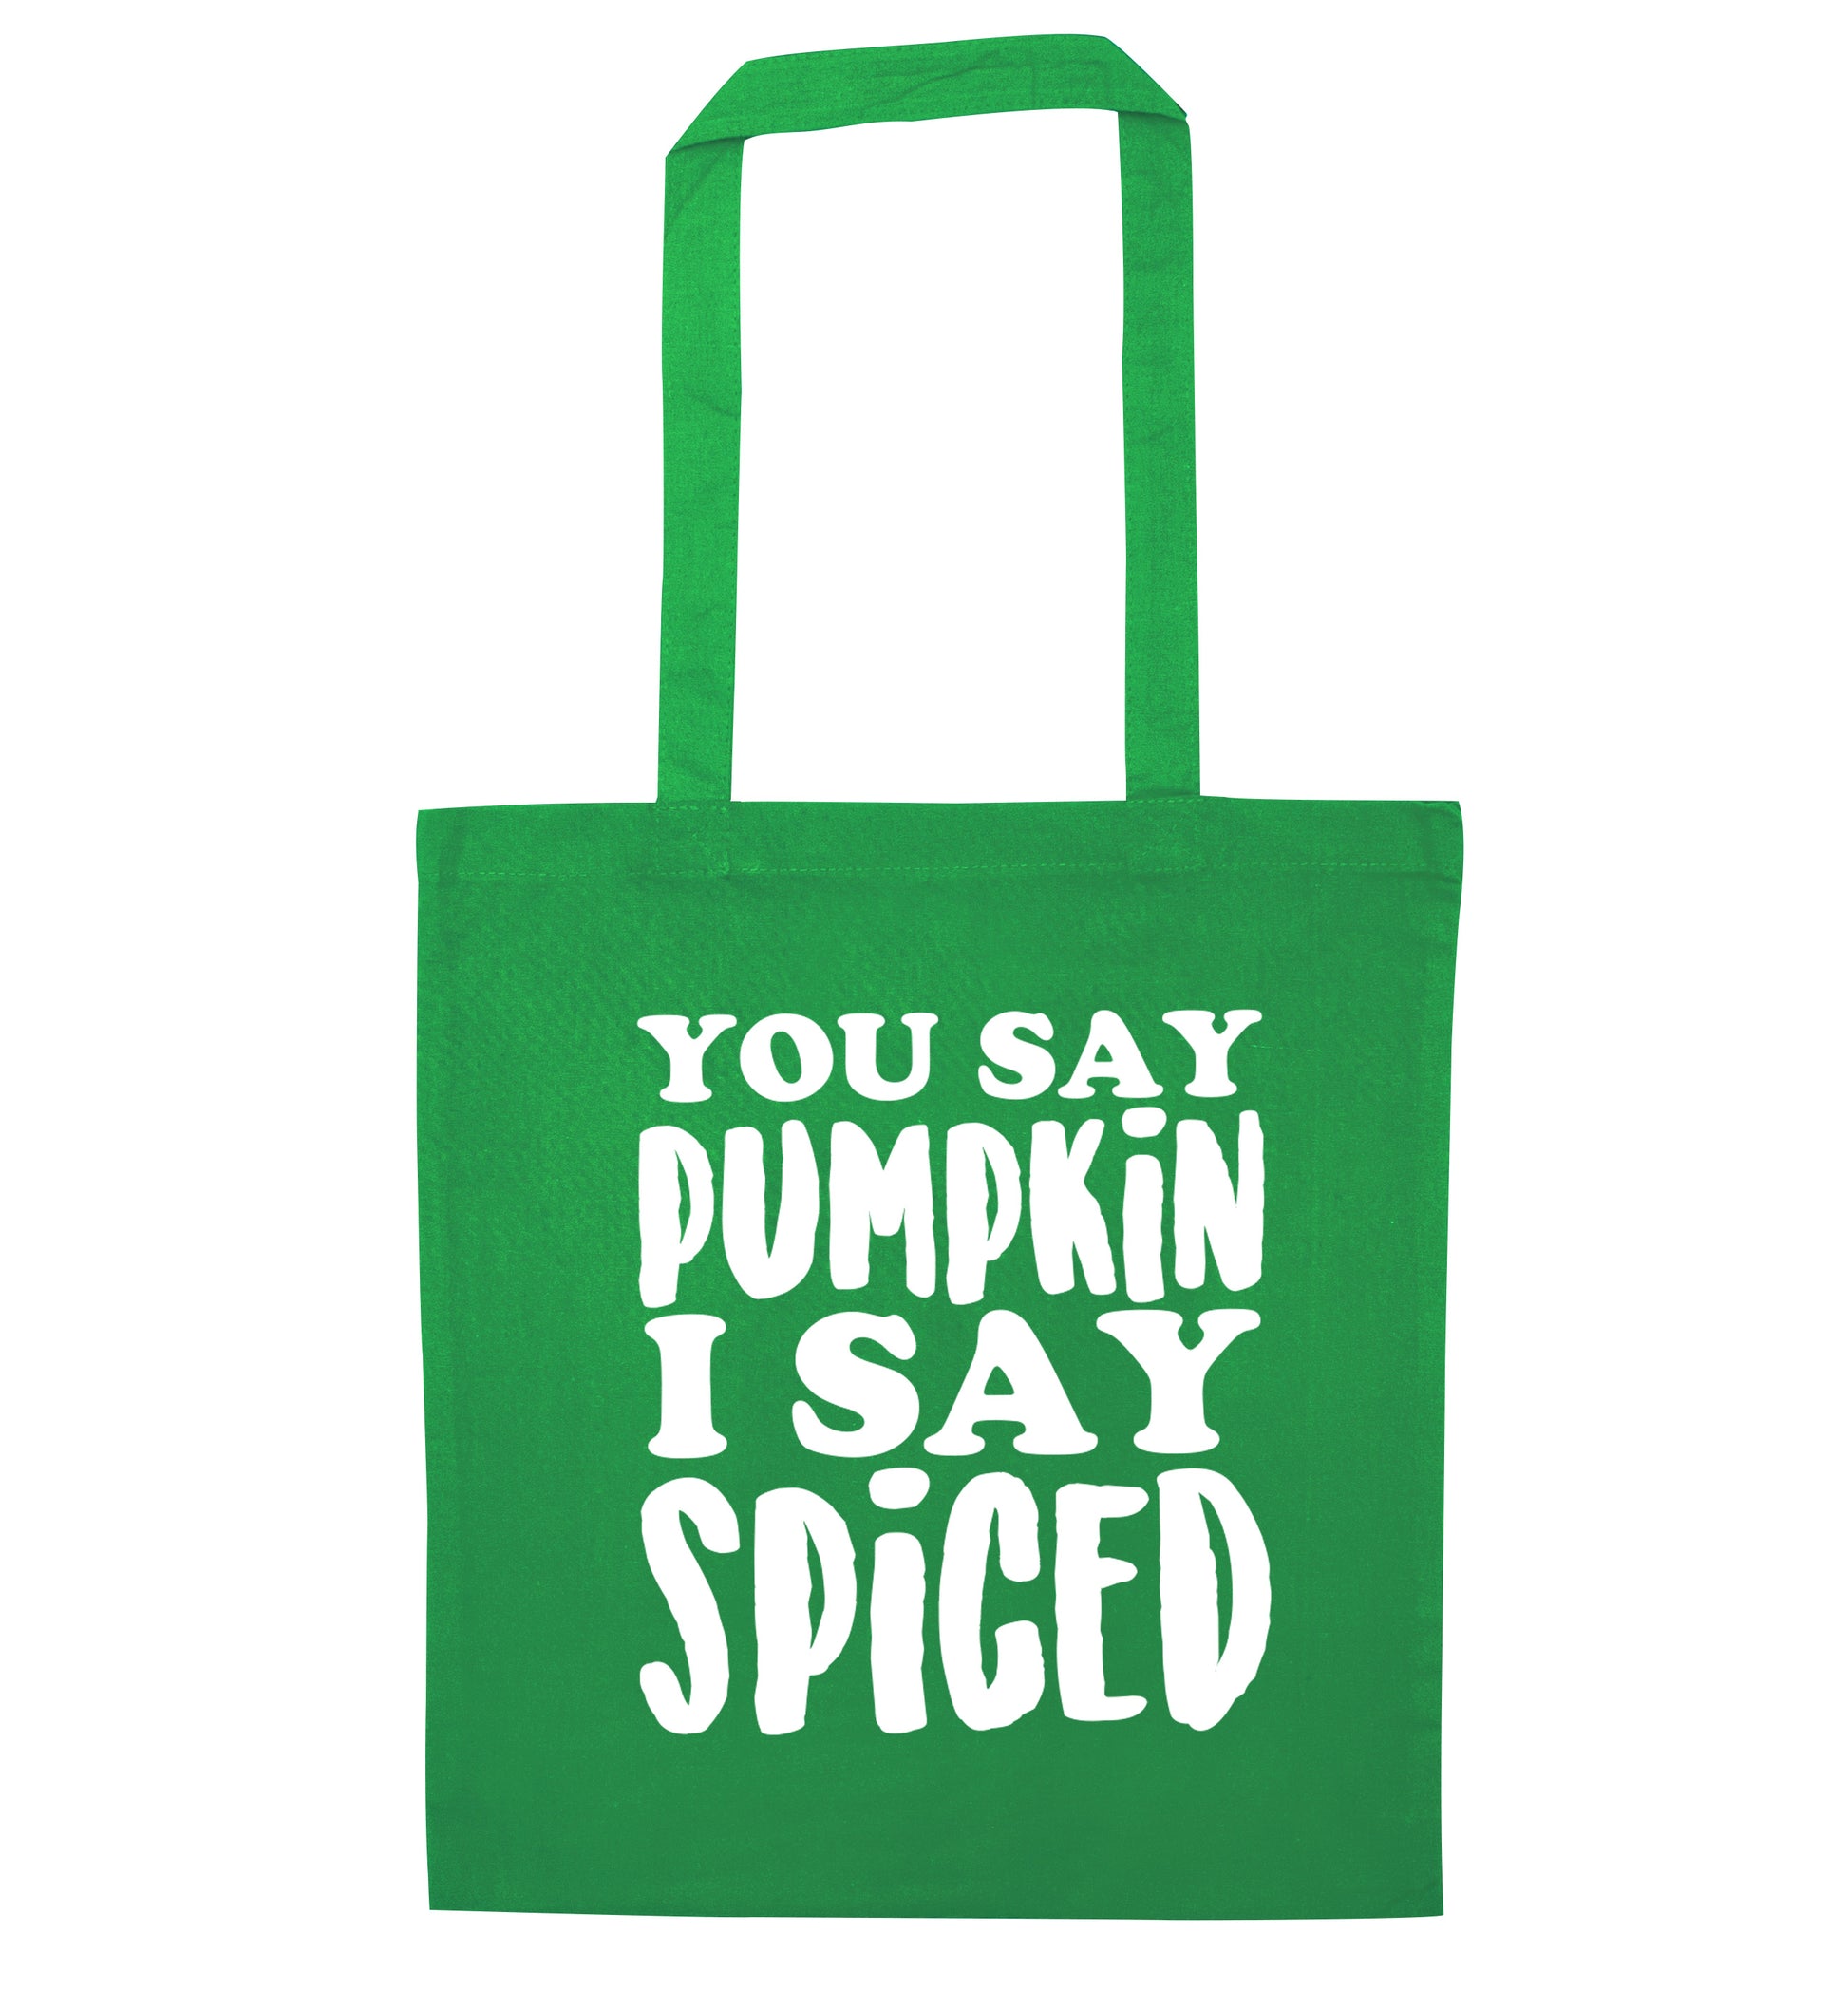 You say pumpkin I say spiced! green tote bag